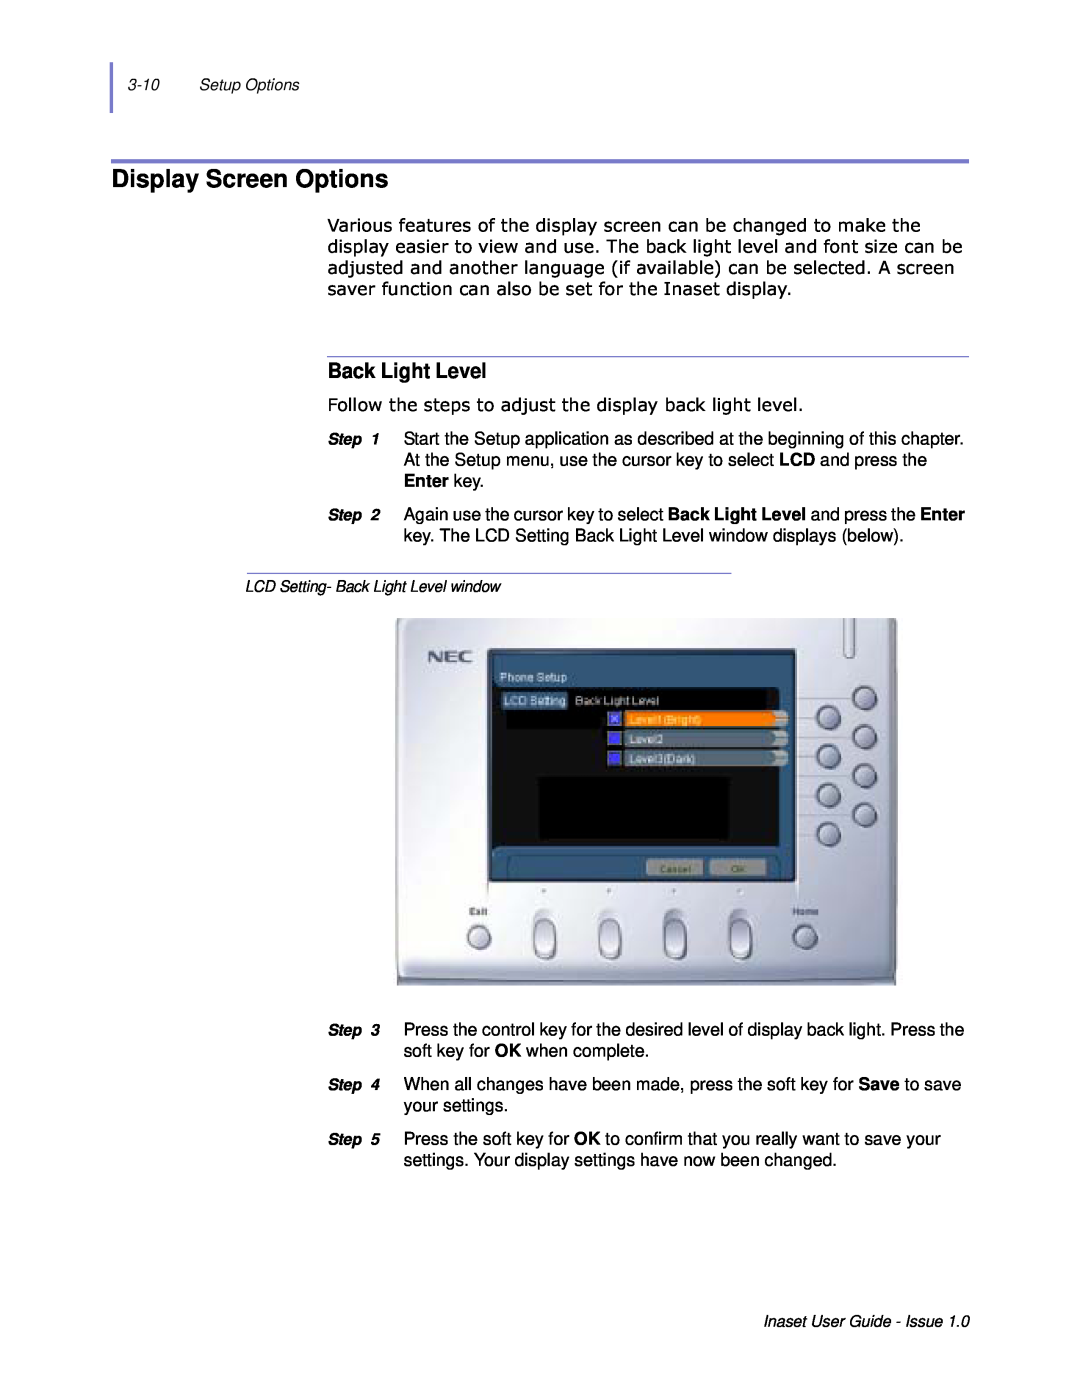 NEC NEAX 2000 IPS manual Display Screen Options, Back Light Level, Enter key 